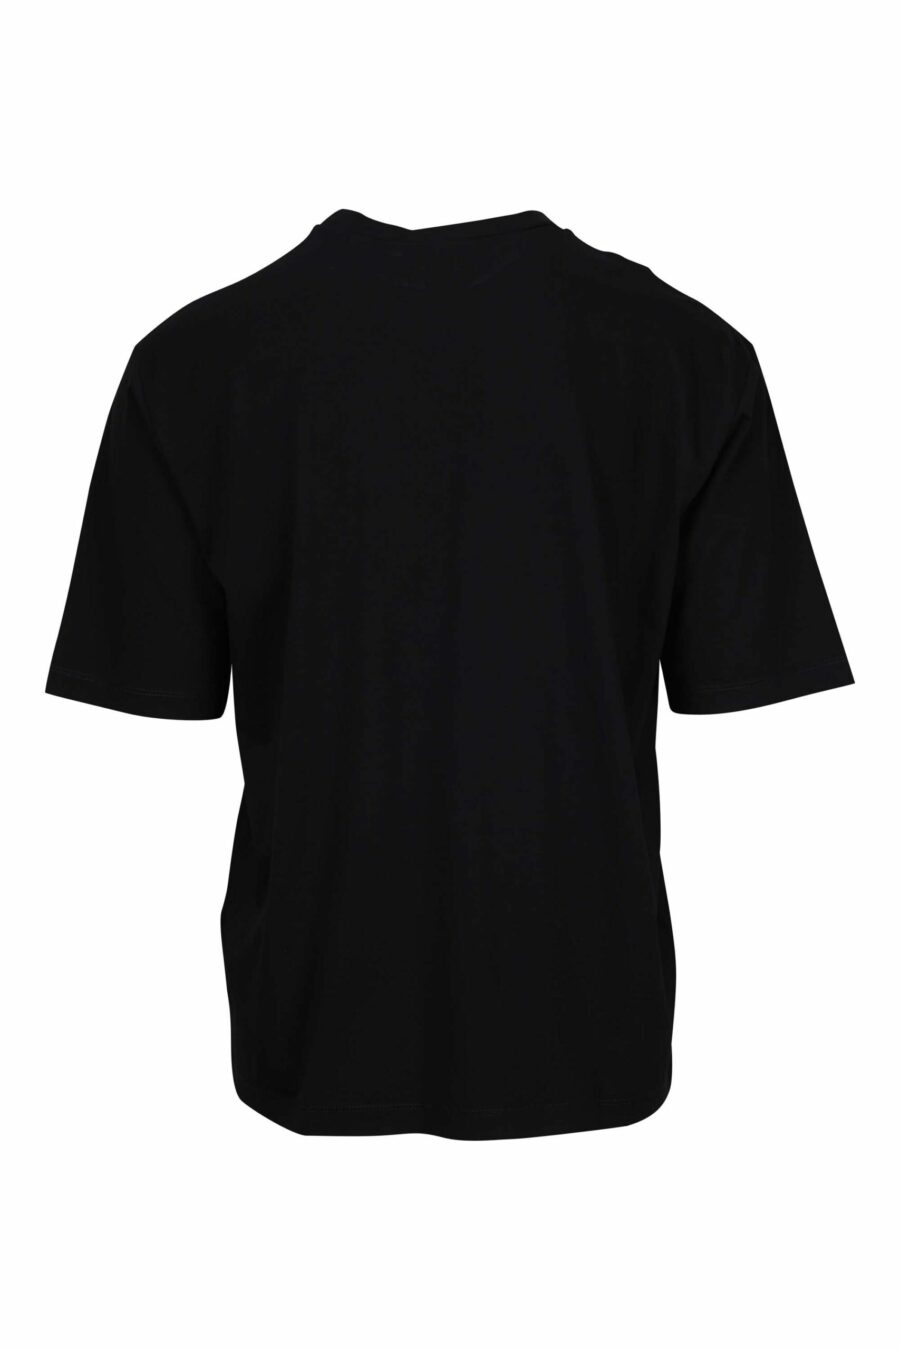 Camiseta negra "oversize" con logo tarjeta de crédito bajo - 8054148265618 1 scaled